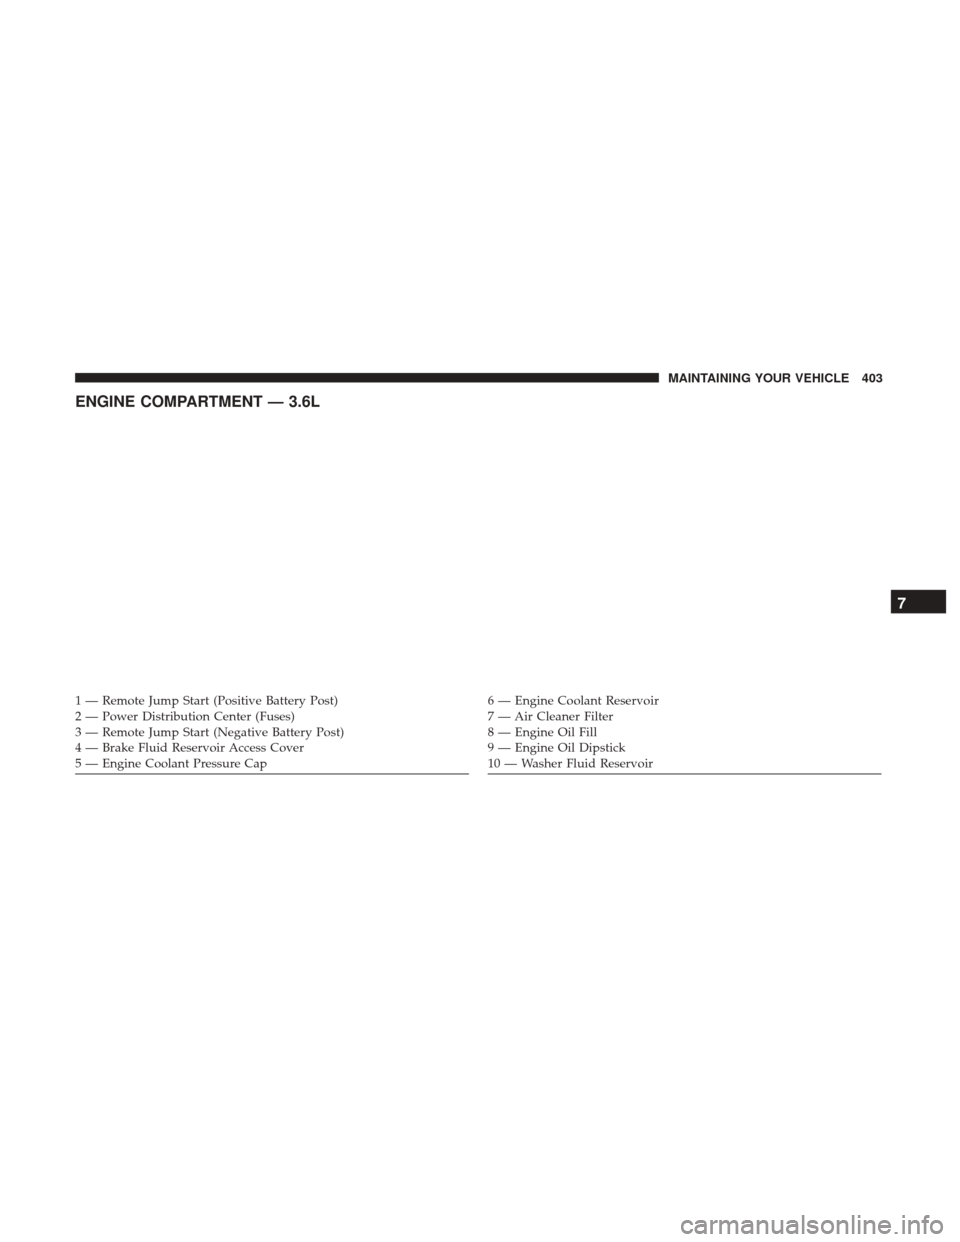 CHRYSLER 300 2017 2.G Owners Manual ENGINE COMPARTMENT — 3.6L
1 — Remote Jump Start (Positive Battery Post)
2 — Power Distribution Center (Fuses)
3 — Remote Jump Start (Negative Battery Post)
4 — Brake Fluid Reservoir Access C